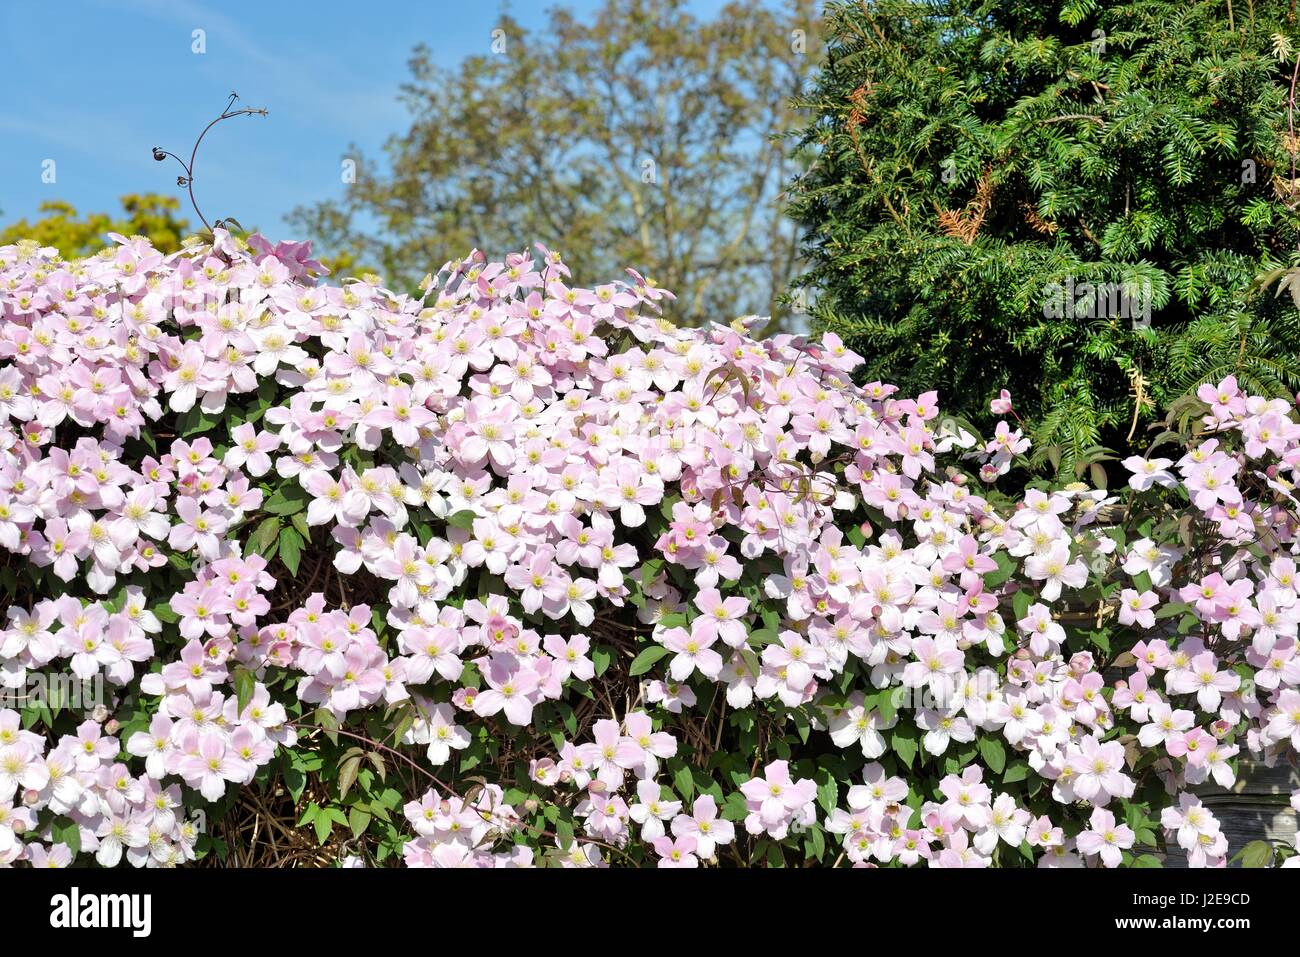 Clematis montana growing in a garden UK Stock Photo